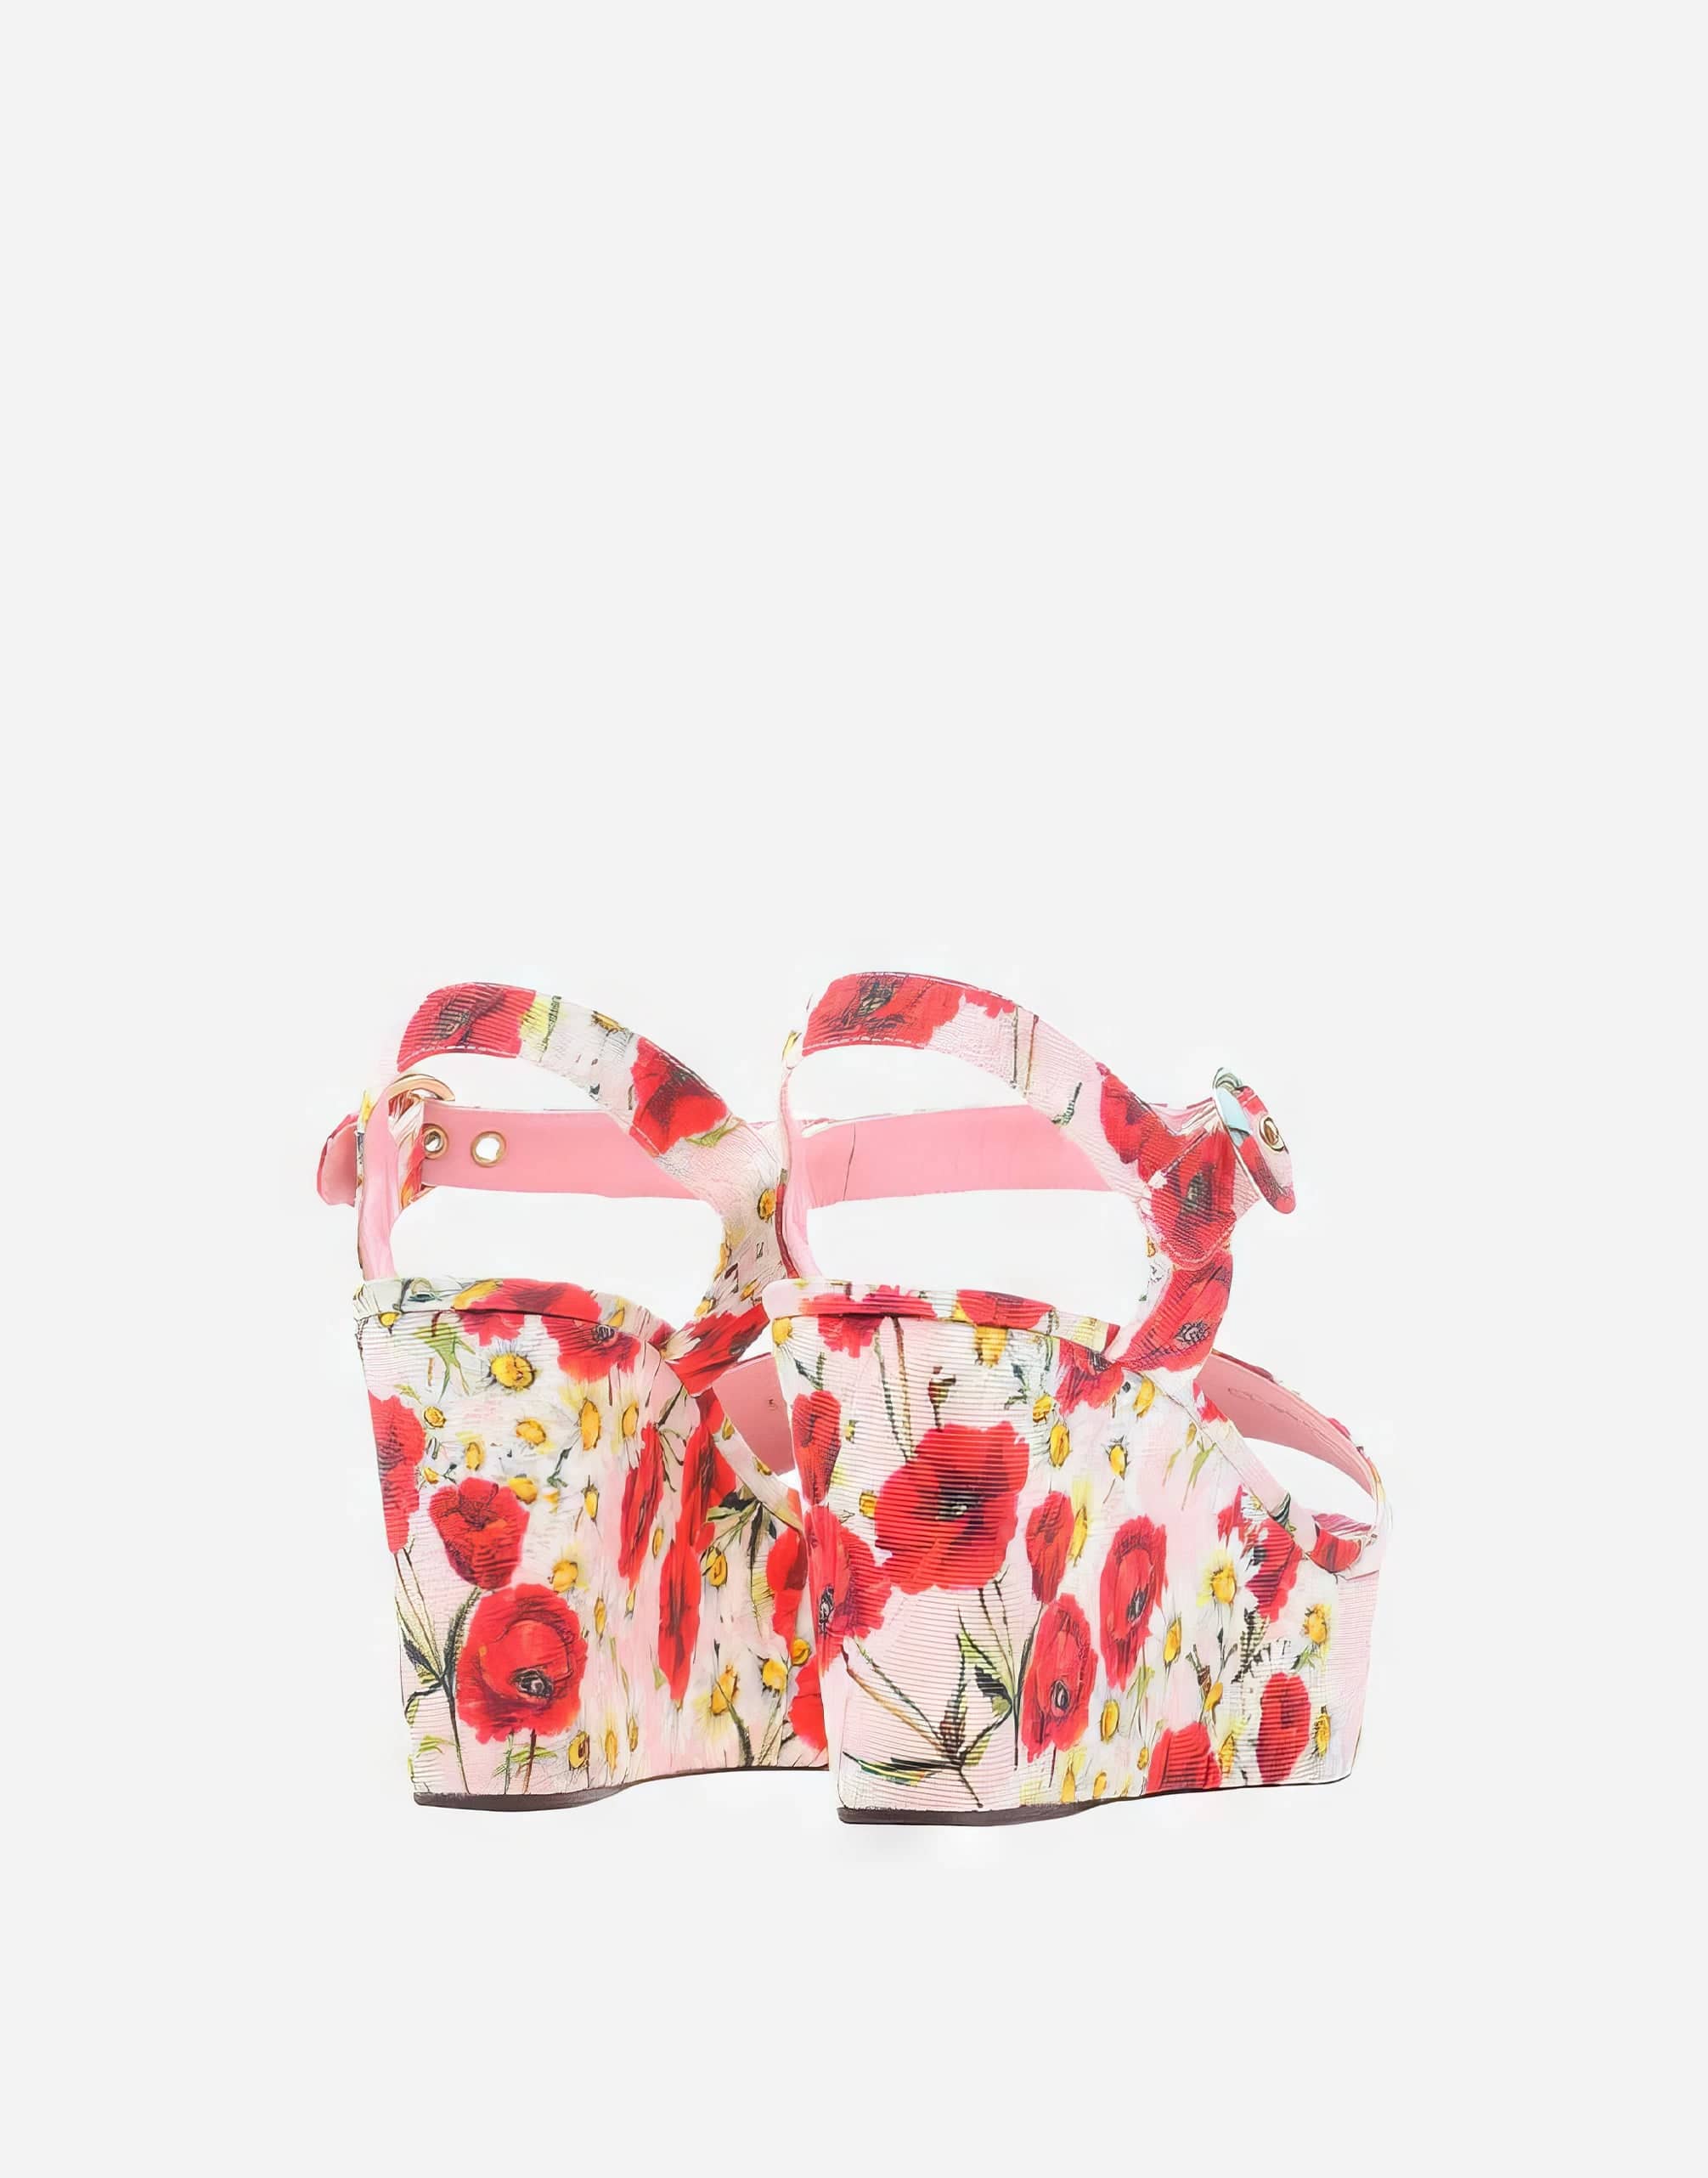 Dolce & Gabbana Multicolor floral print Wedges Floral Ankle Strap Sandals